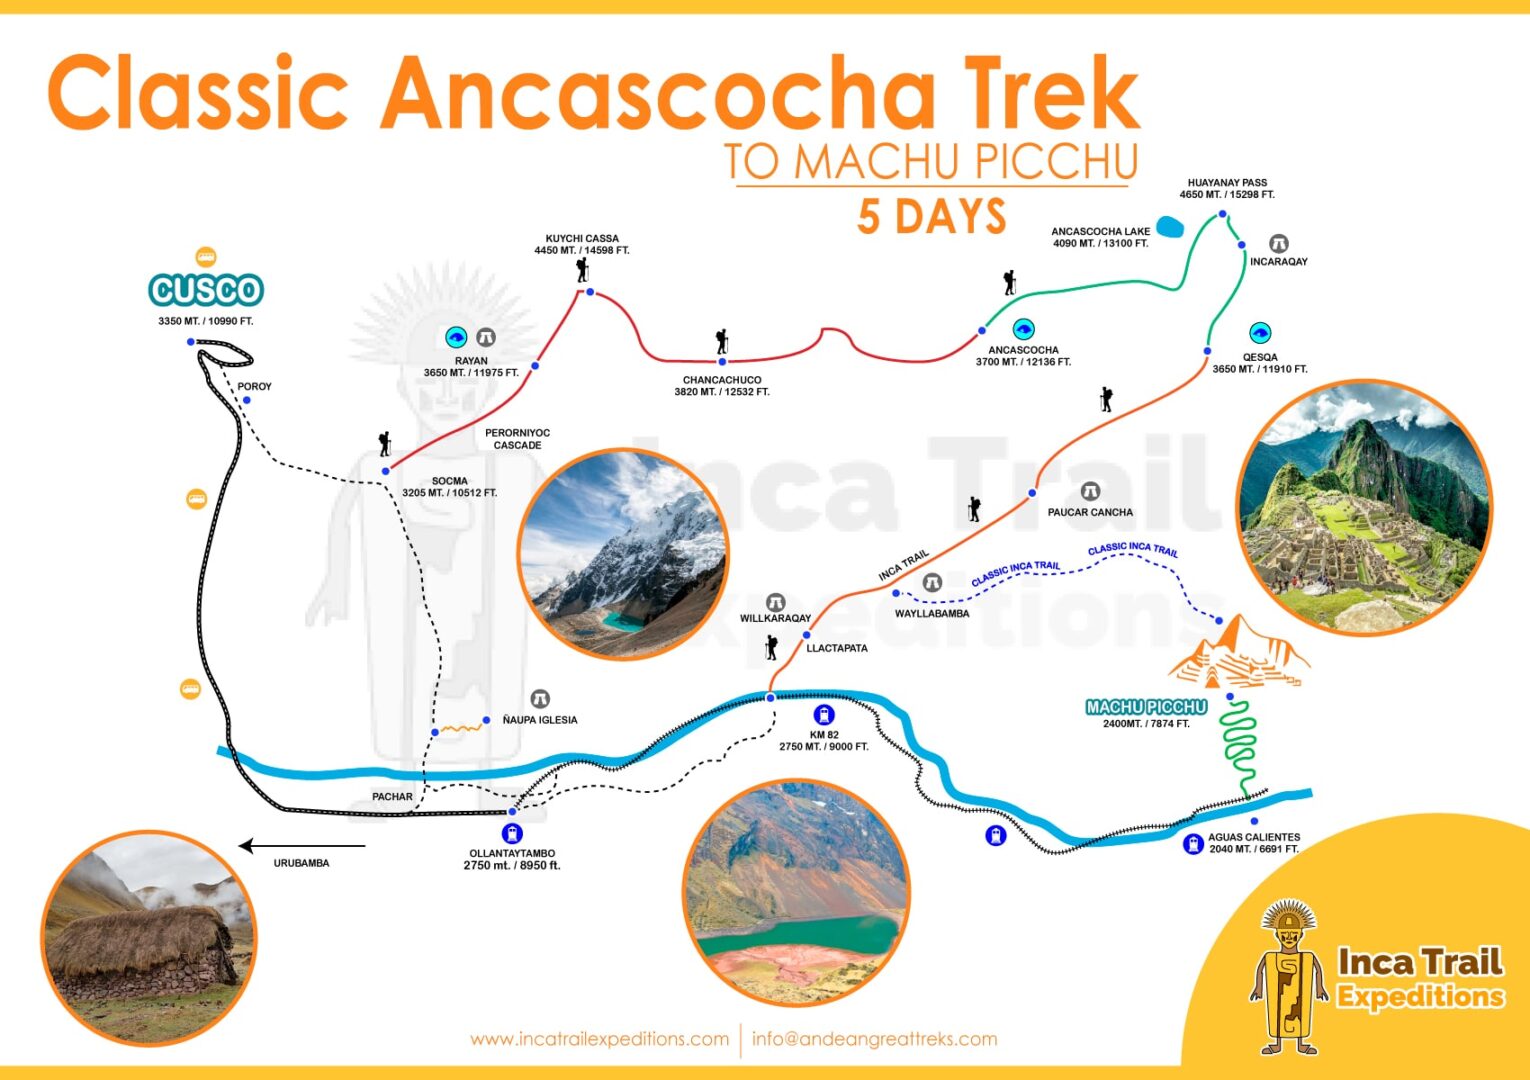 Ancascocha Trail to Machu Picchu 5 Days